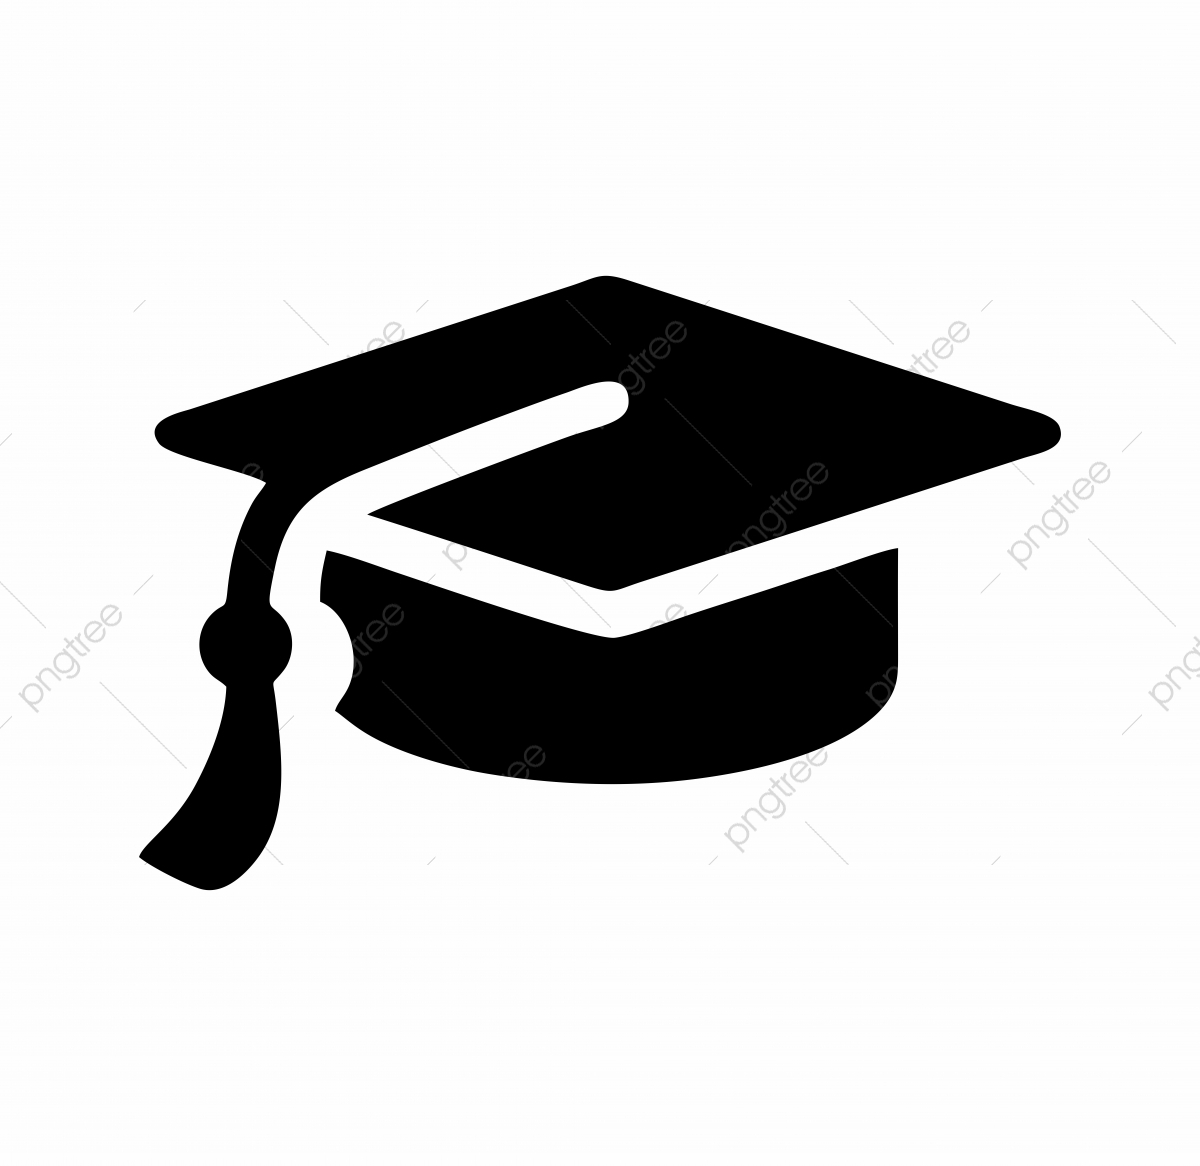 graduation cap logo png 10 free Cliparts | Download images on